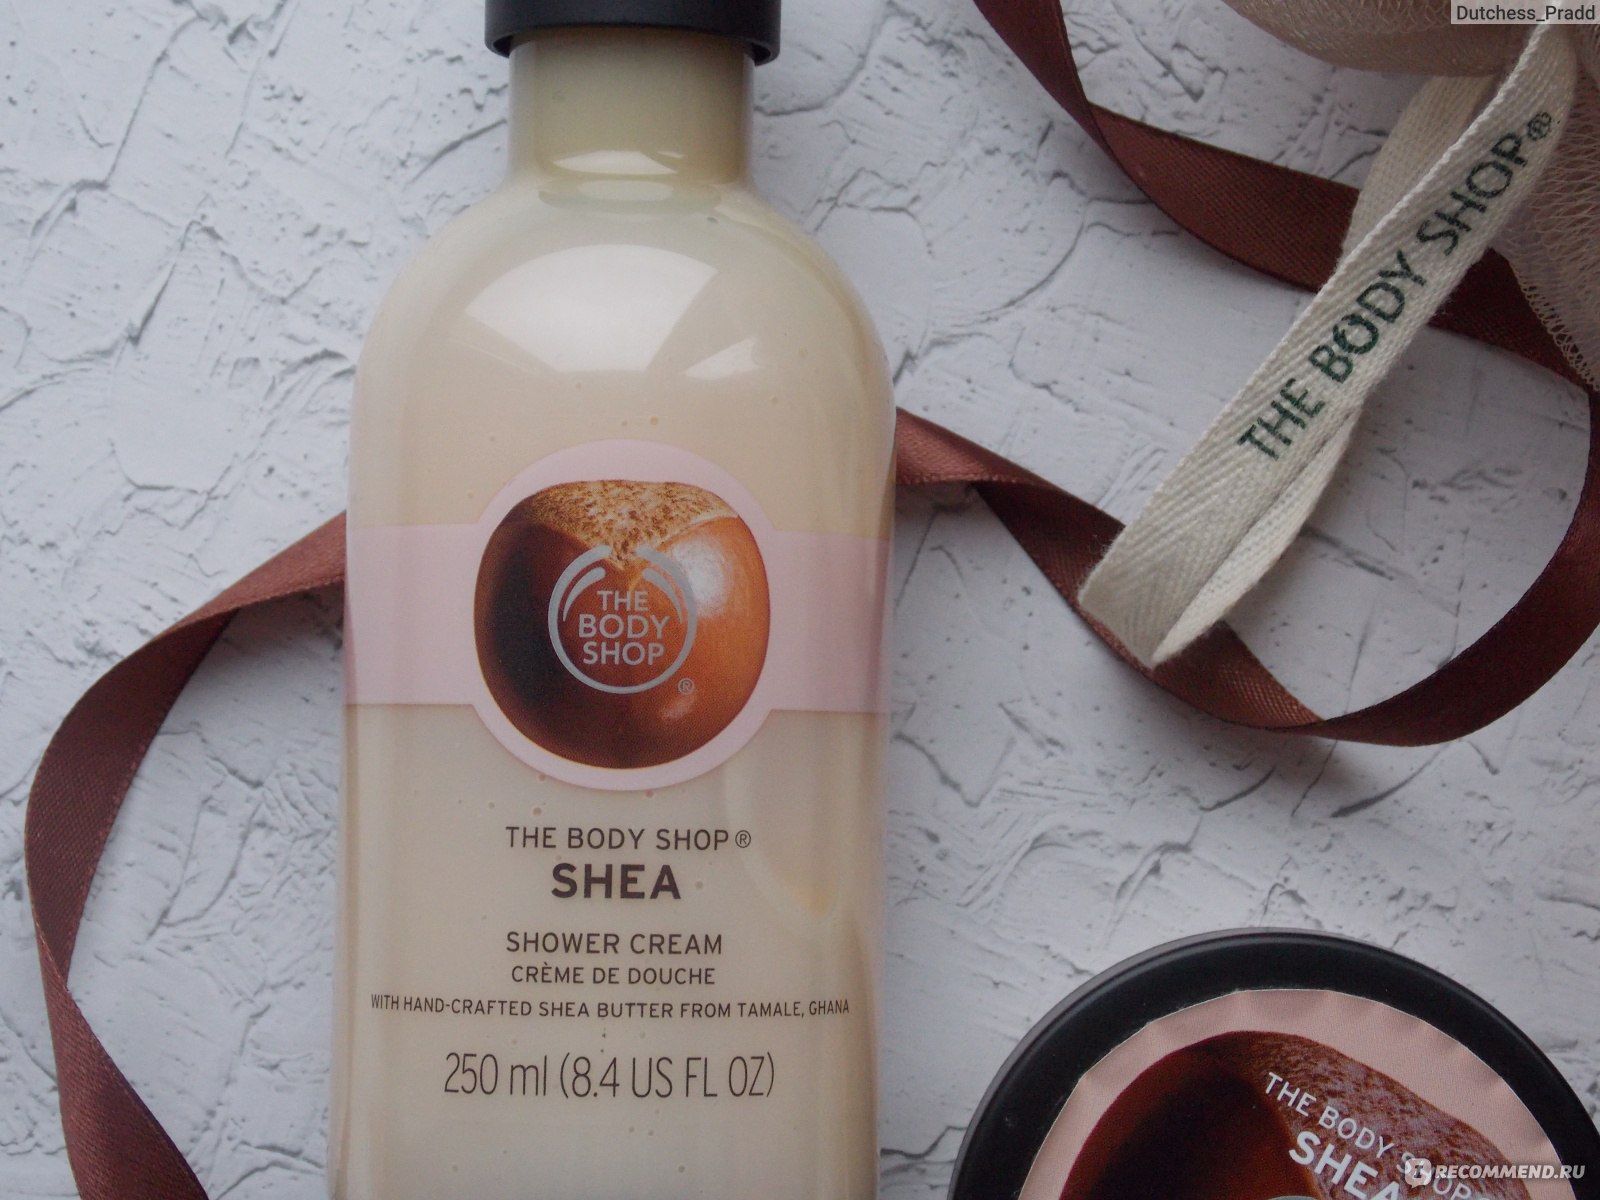 The body shop Shea Shower Cream